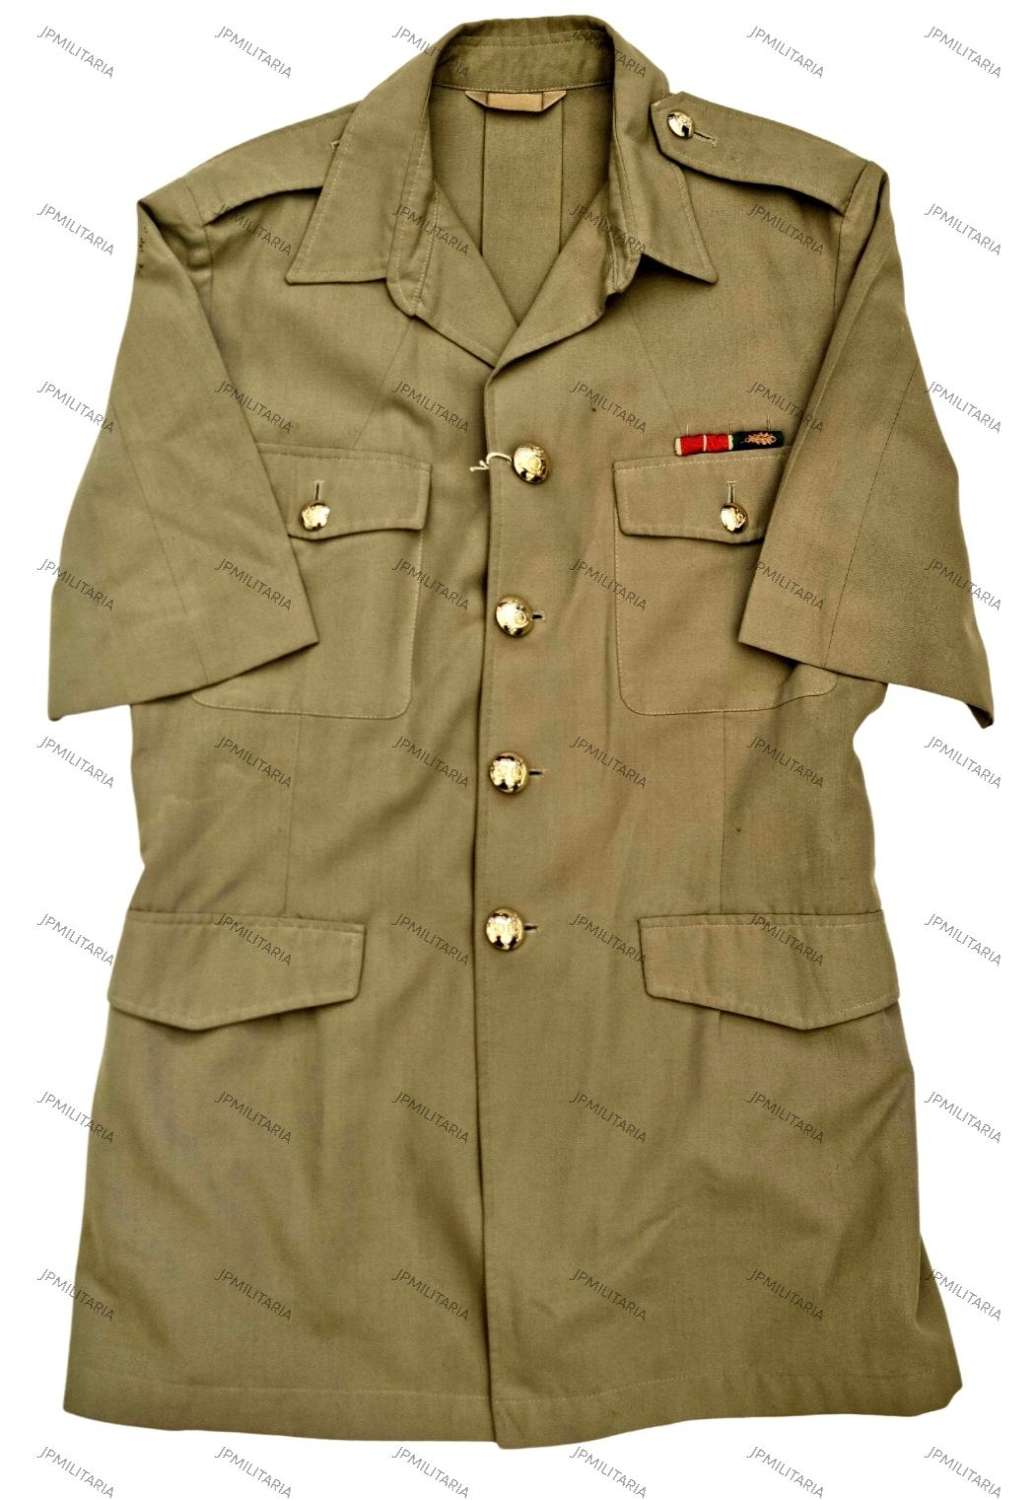 British Army khaki drill uniform